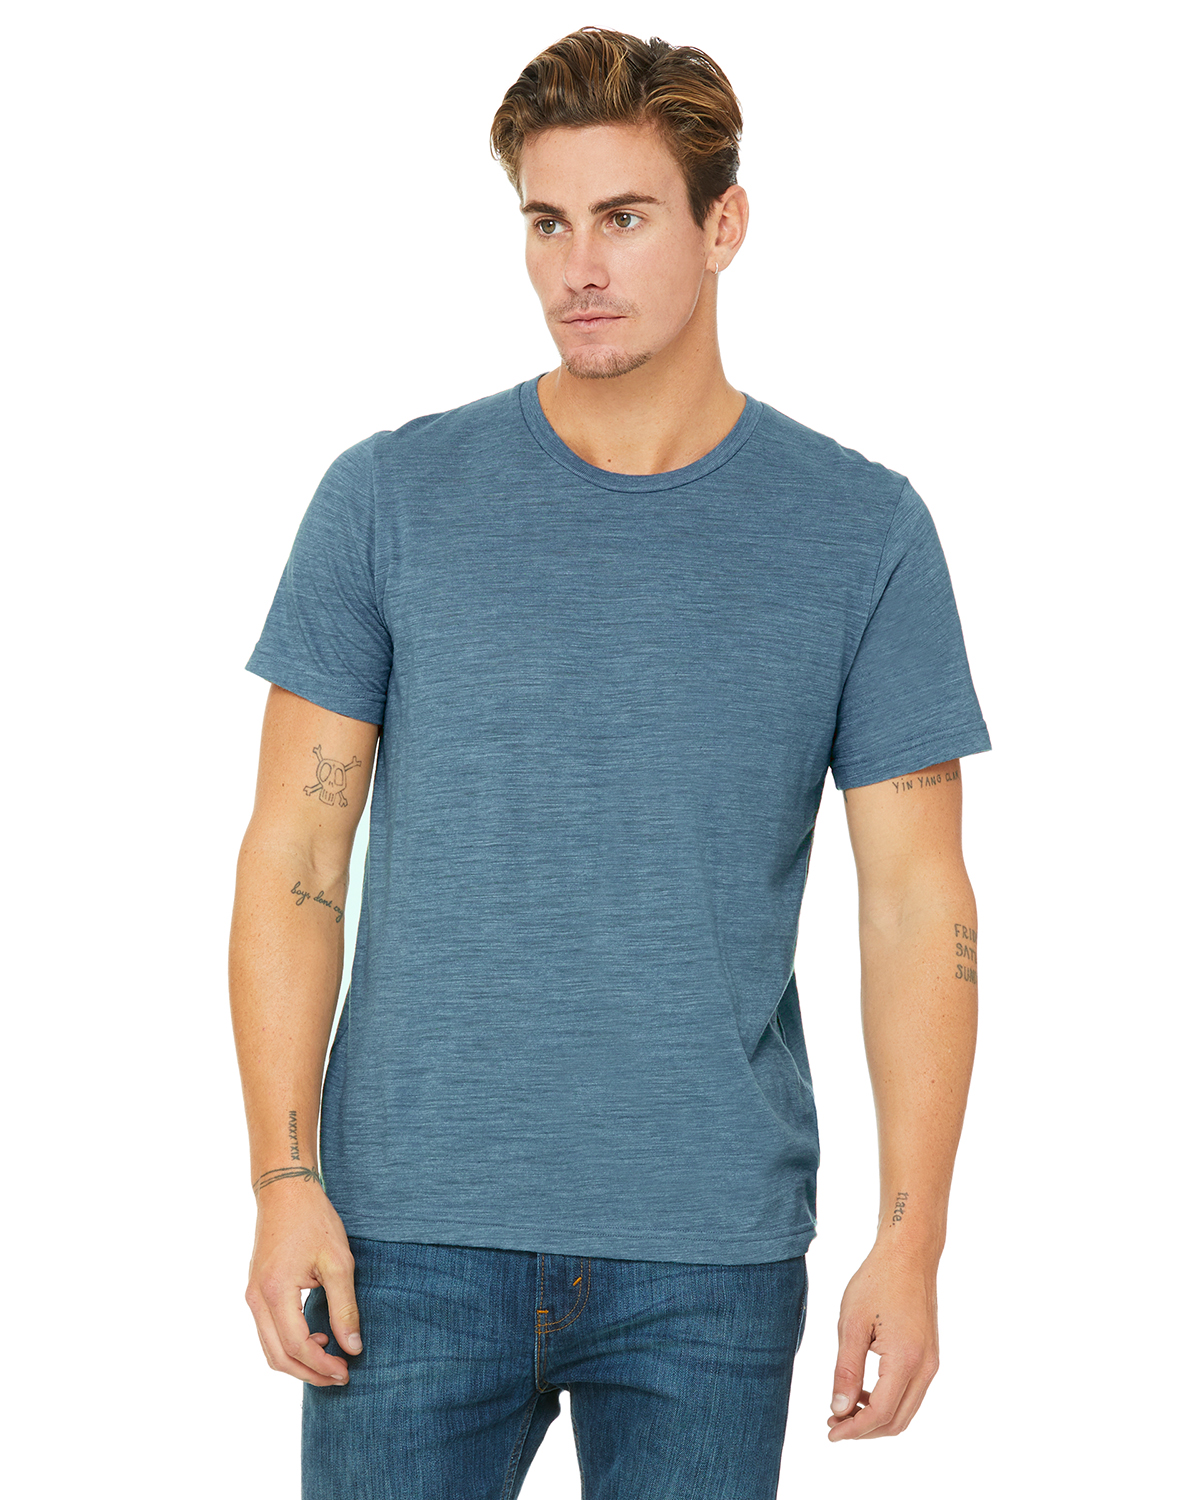 Canvas 3650 - Polyester/Cotton Unisex T-Shirt $9.12 - T-Shirts